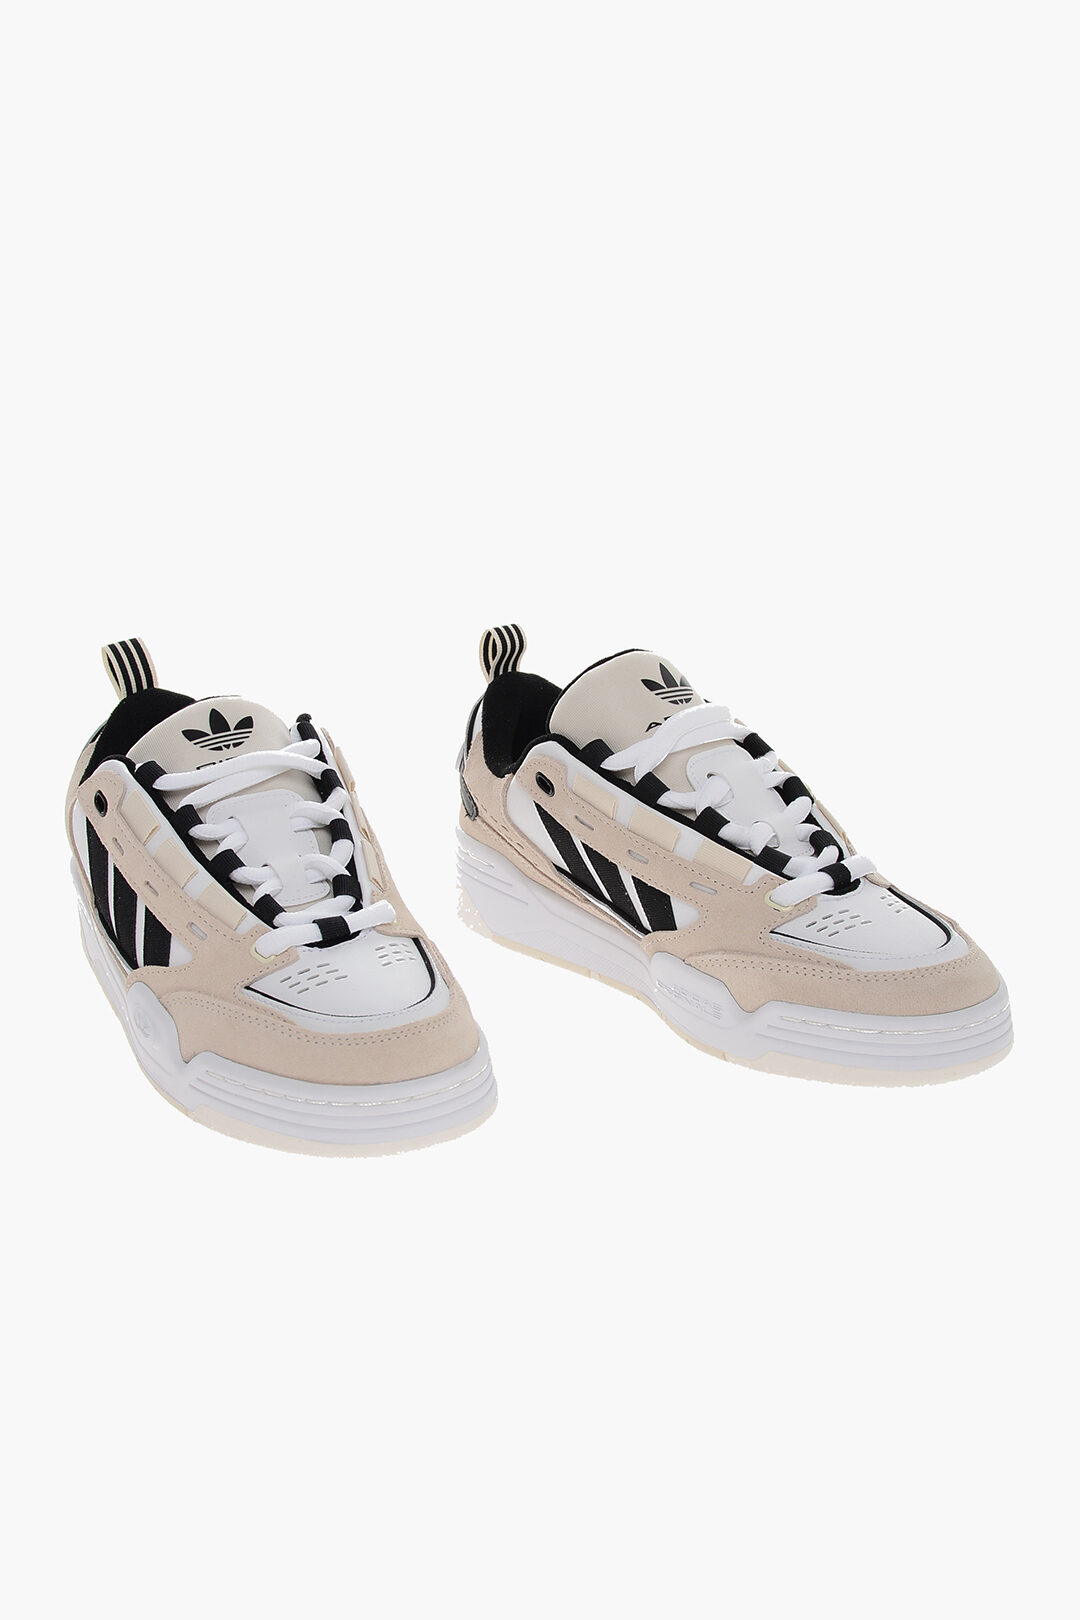 Buy adidas Originals Men's Forum Low Sneaker, White/White/White, 16 at  Amazon.in